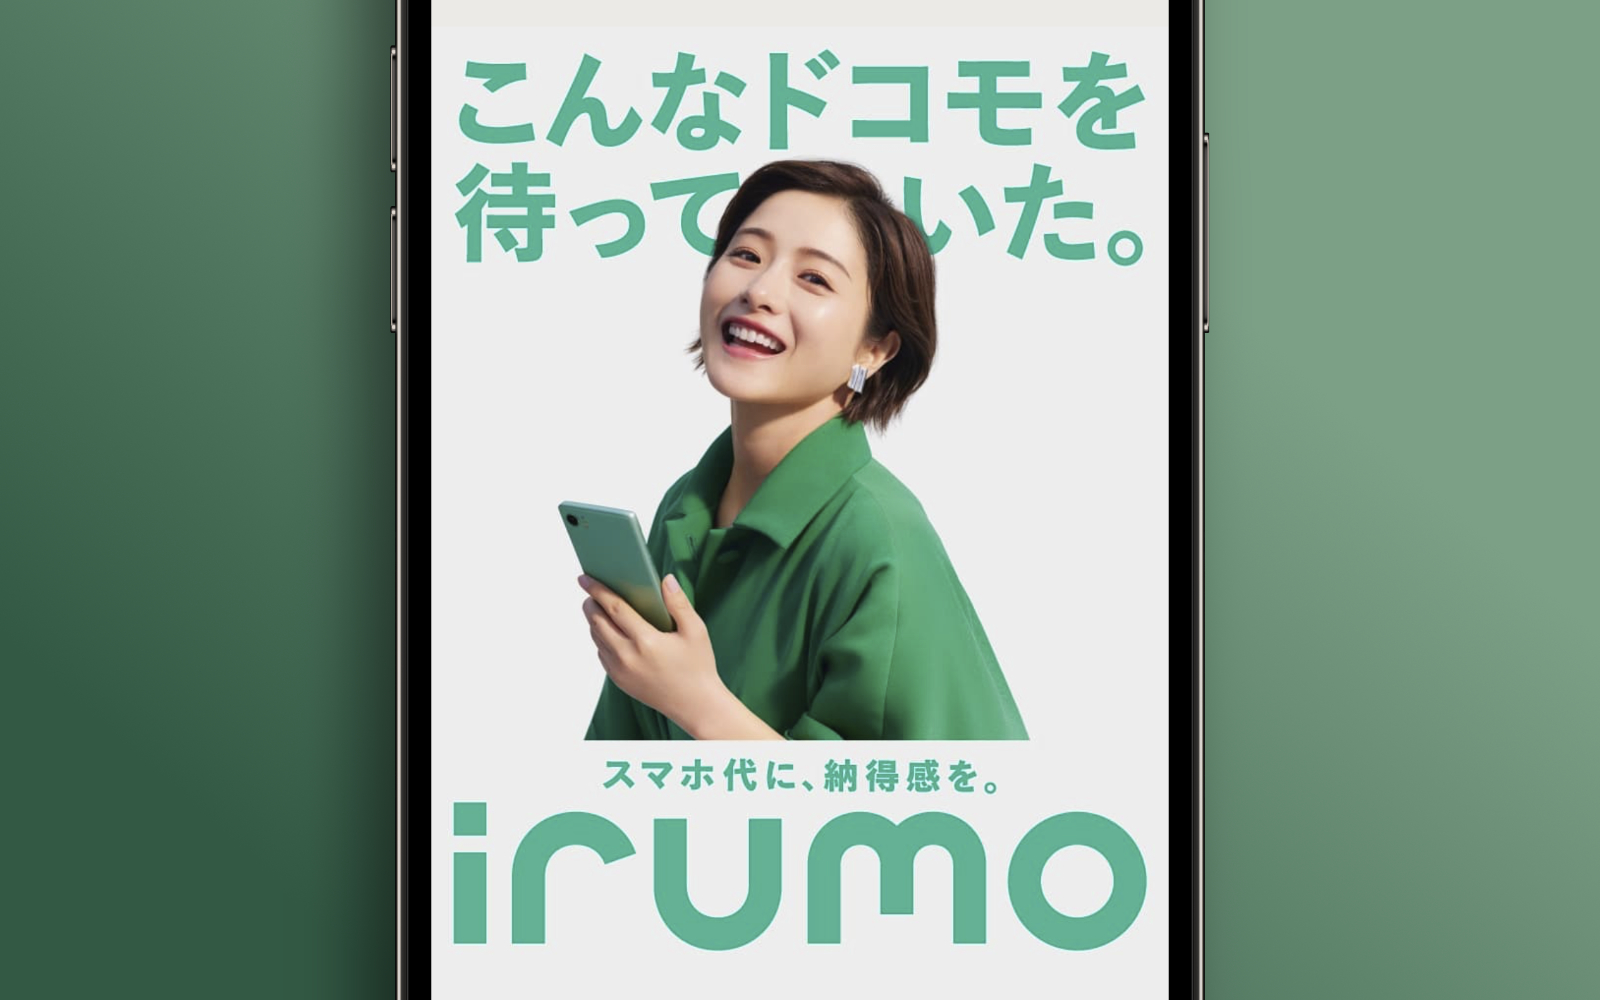 Irumo top image